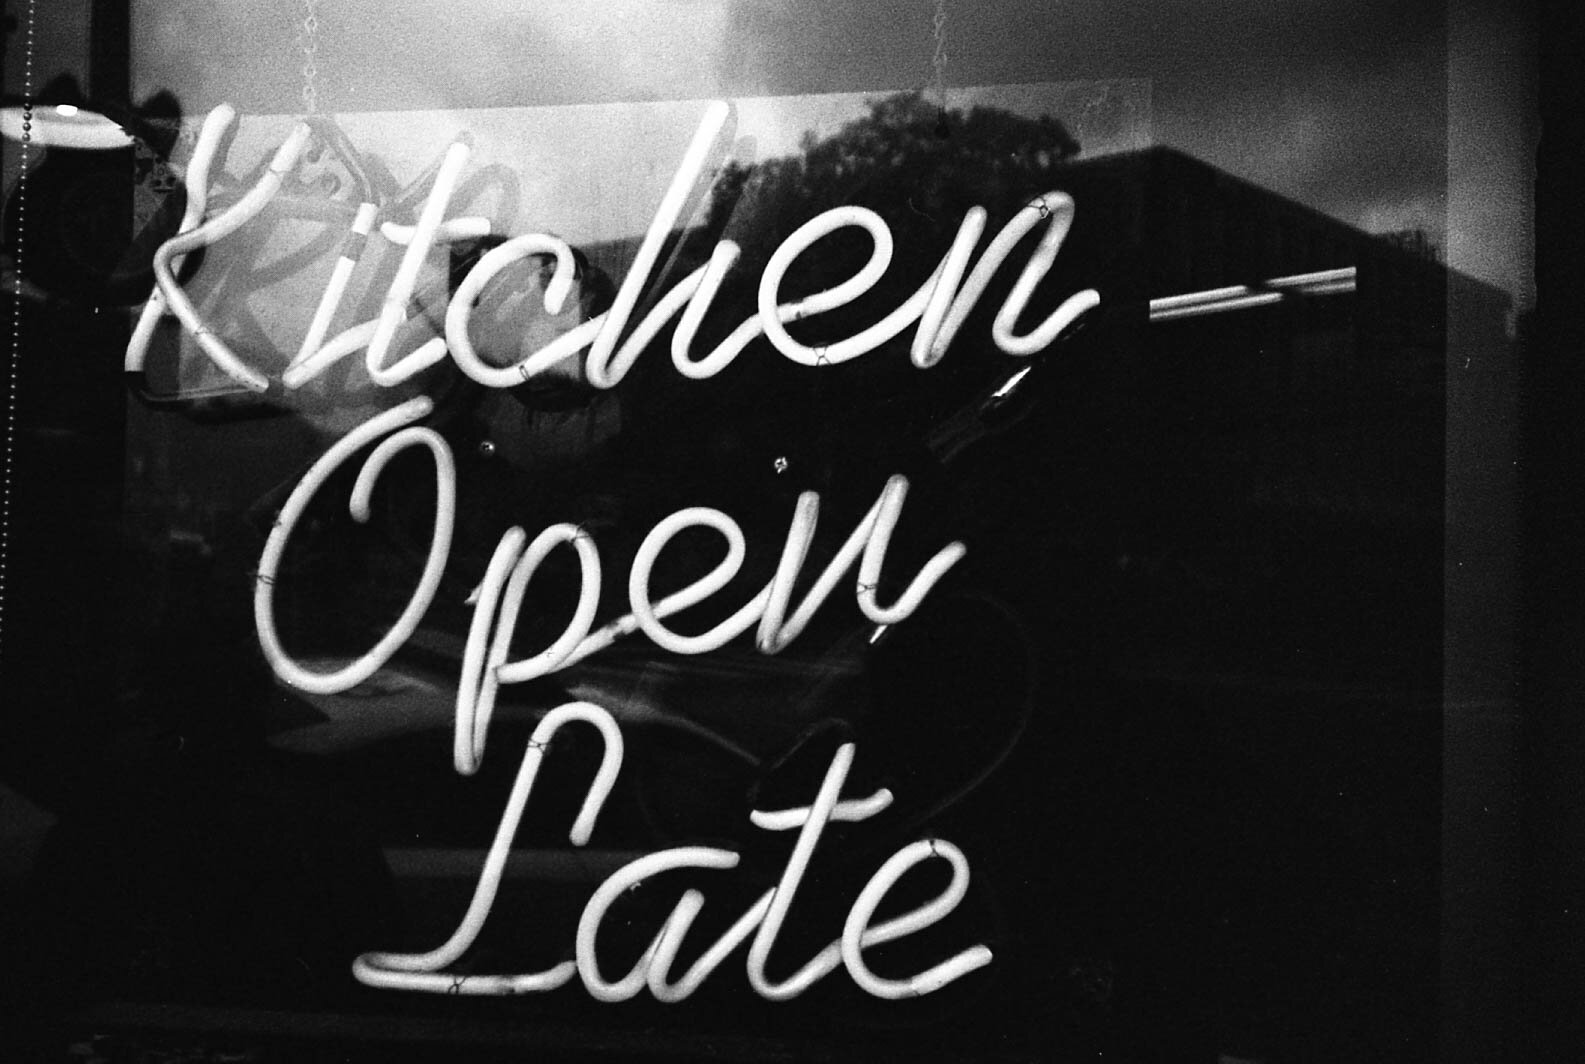  Kitchen Open Late